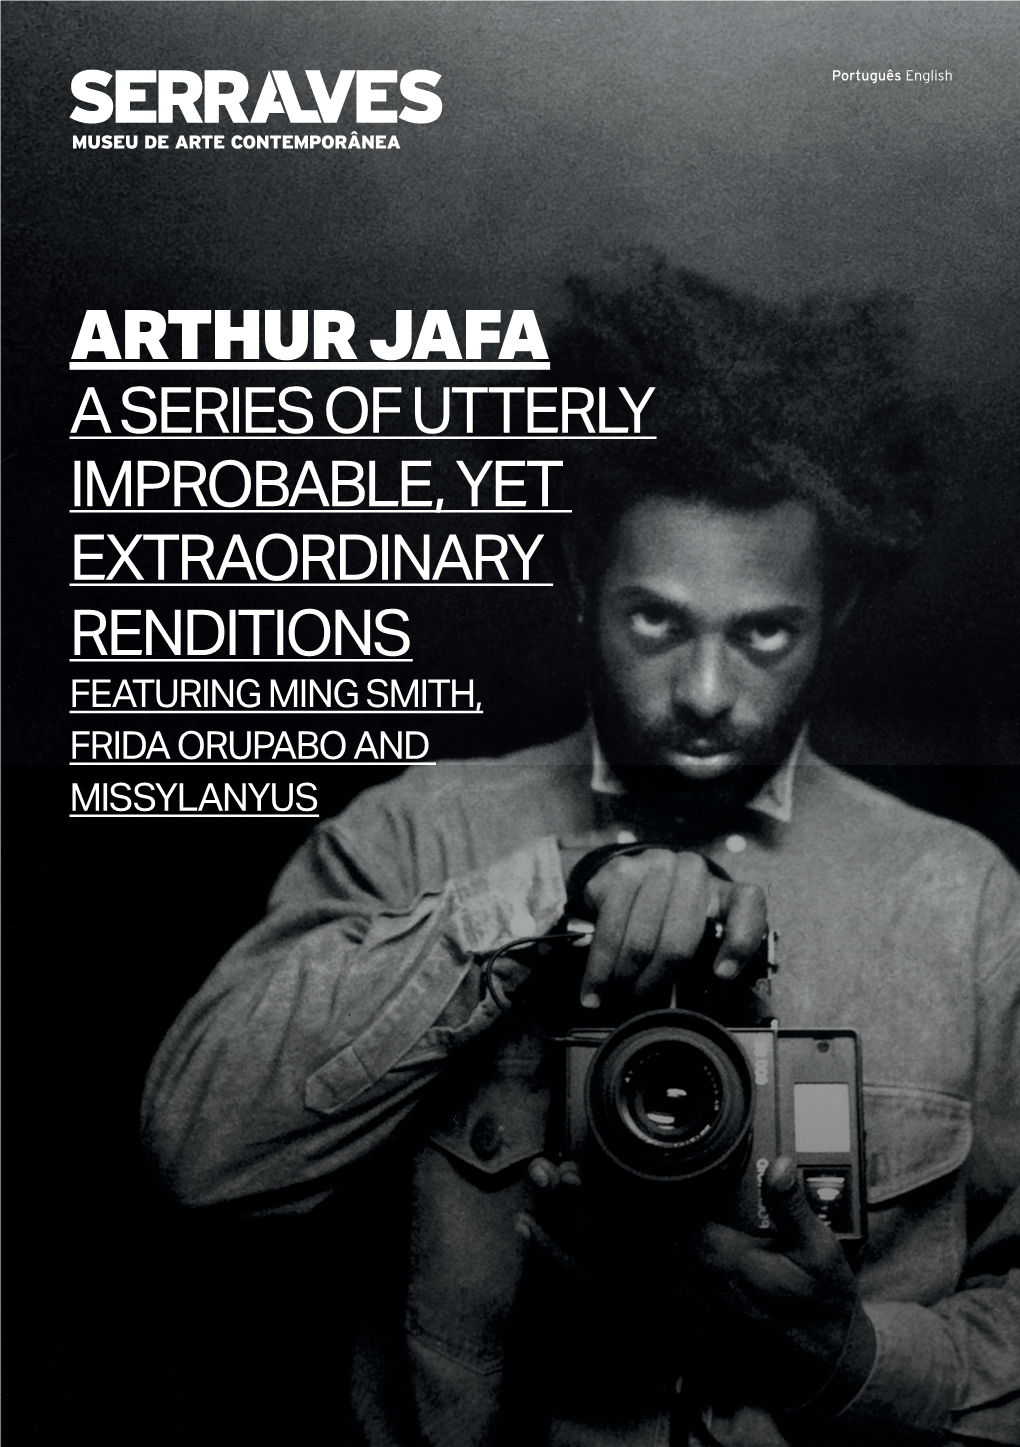 ARTHUR JAFA a SERIES of UTTERLY IMPROBABLE, YET EXTRAORDINARY RENDITIONS FEATURING MING SMITH, FRIDA ORUPABO and MISSYLANYUS Imagem Image: Arthur Jafa, Monster, 1988